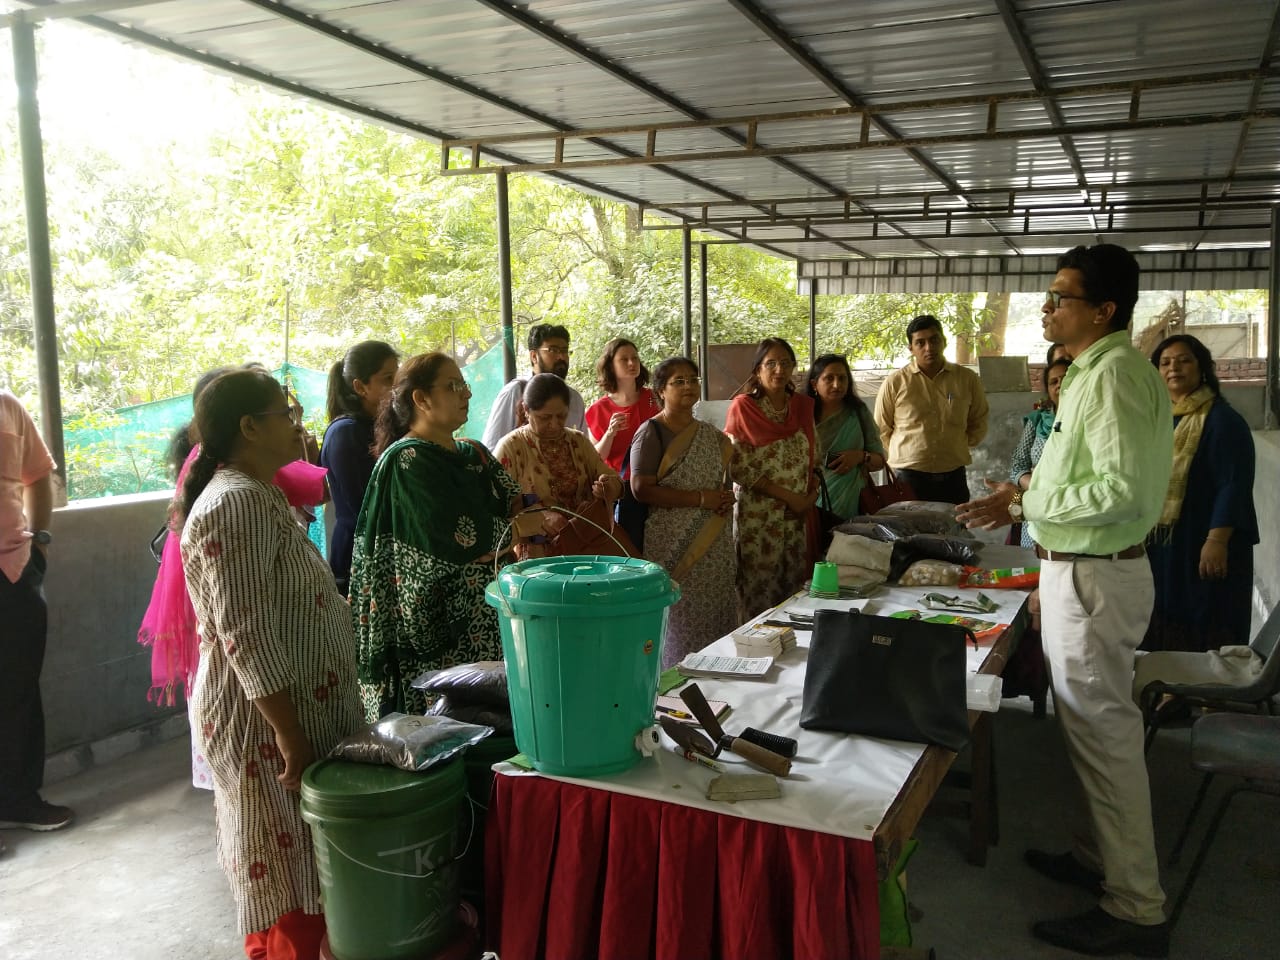 Terrace Farming Training Session at Daulat Ram College by Environmentalist Pravin Mishra